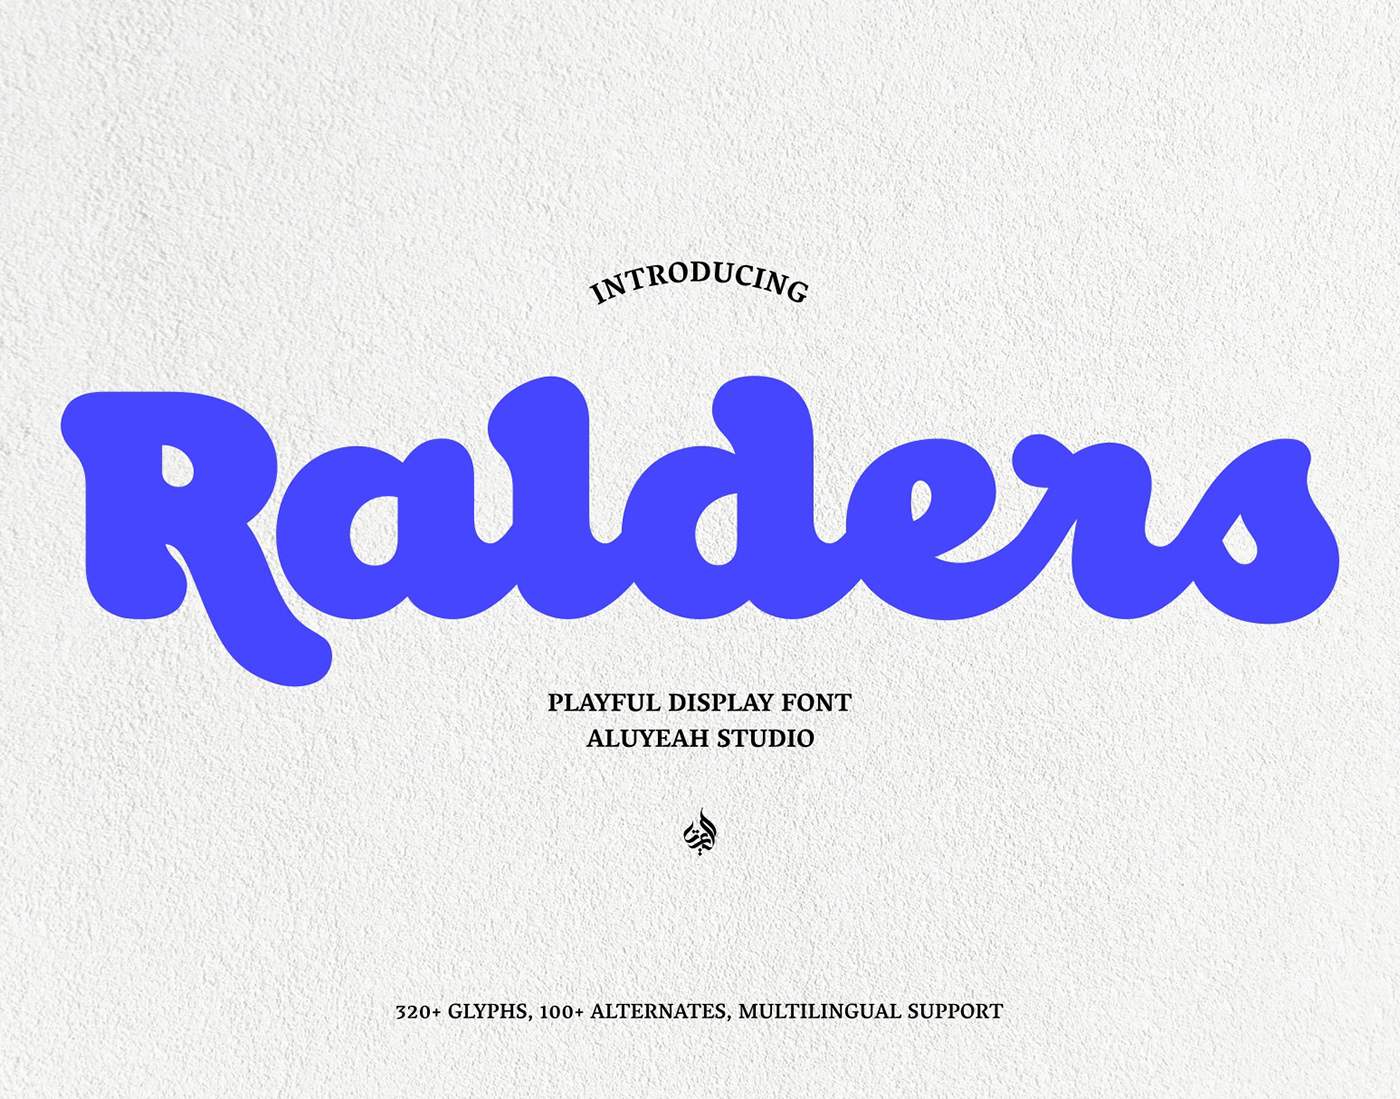 Ralders playful semi cursive display font